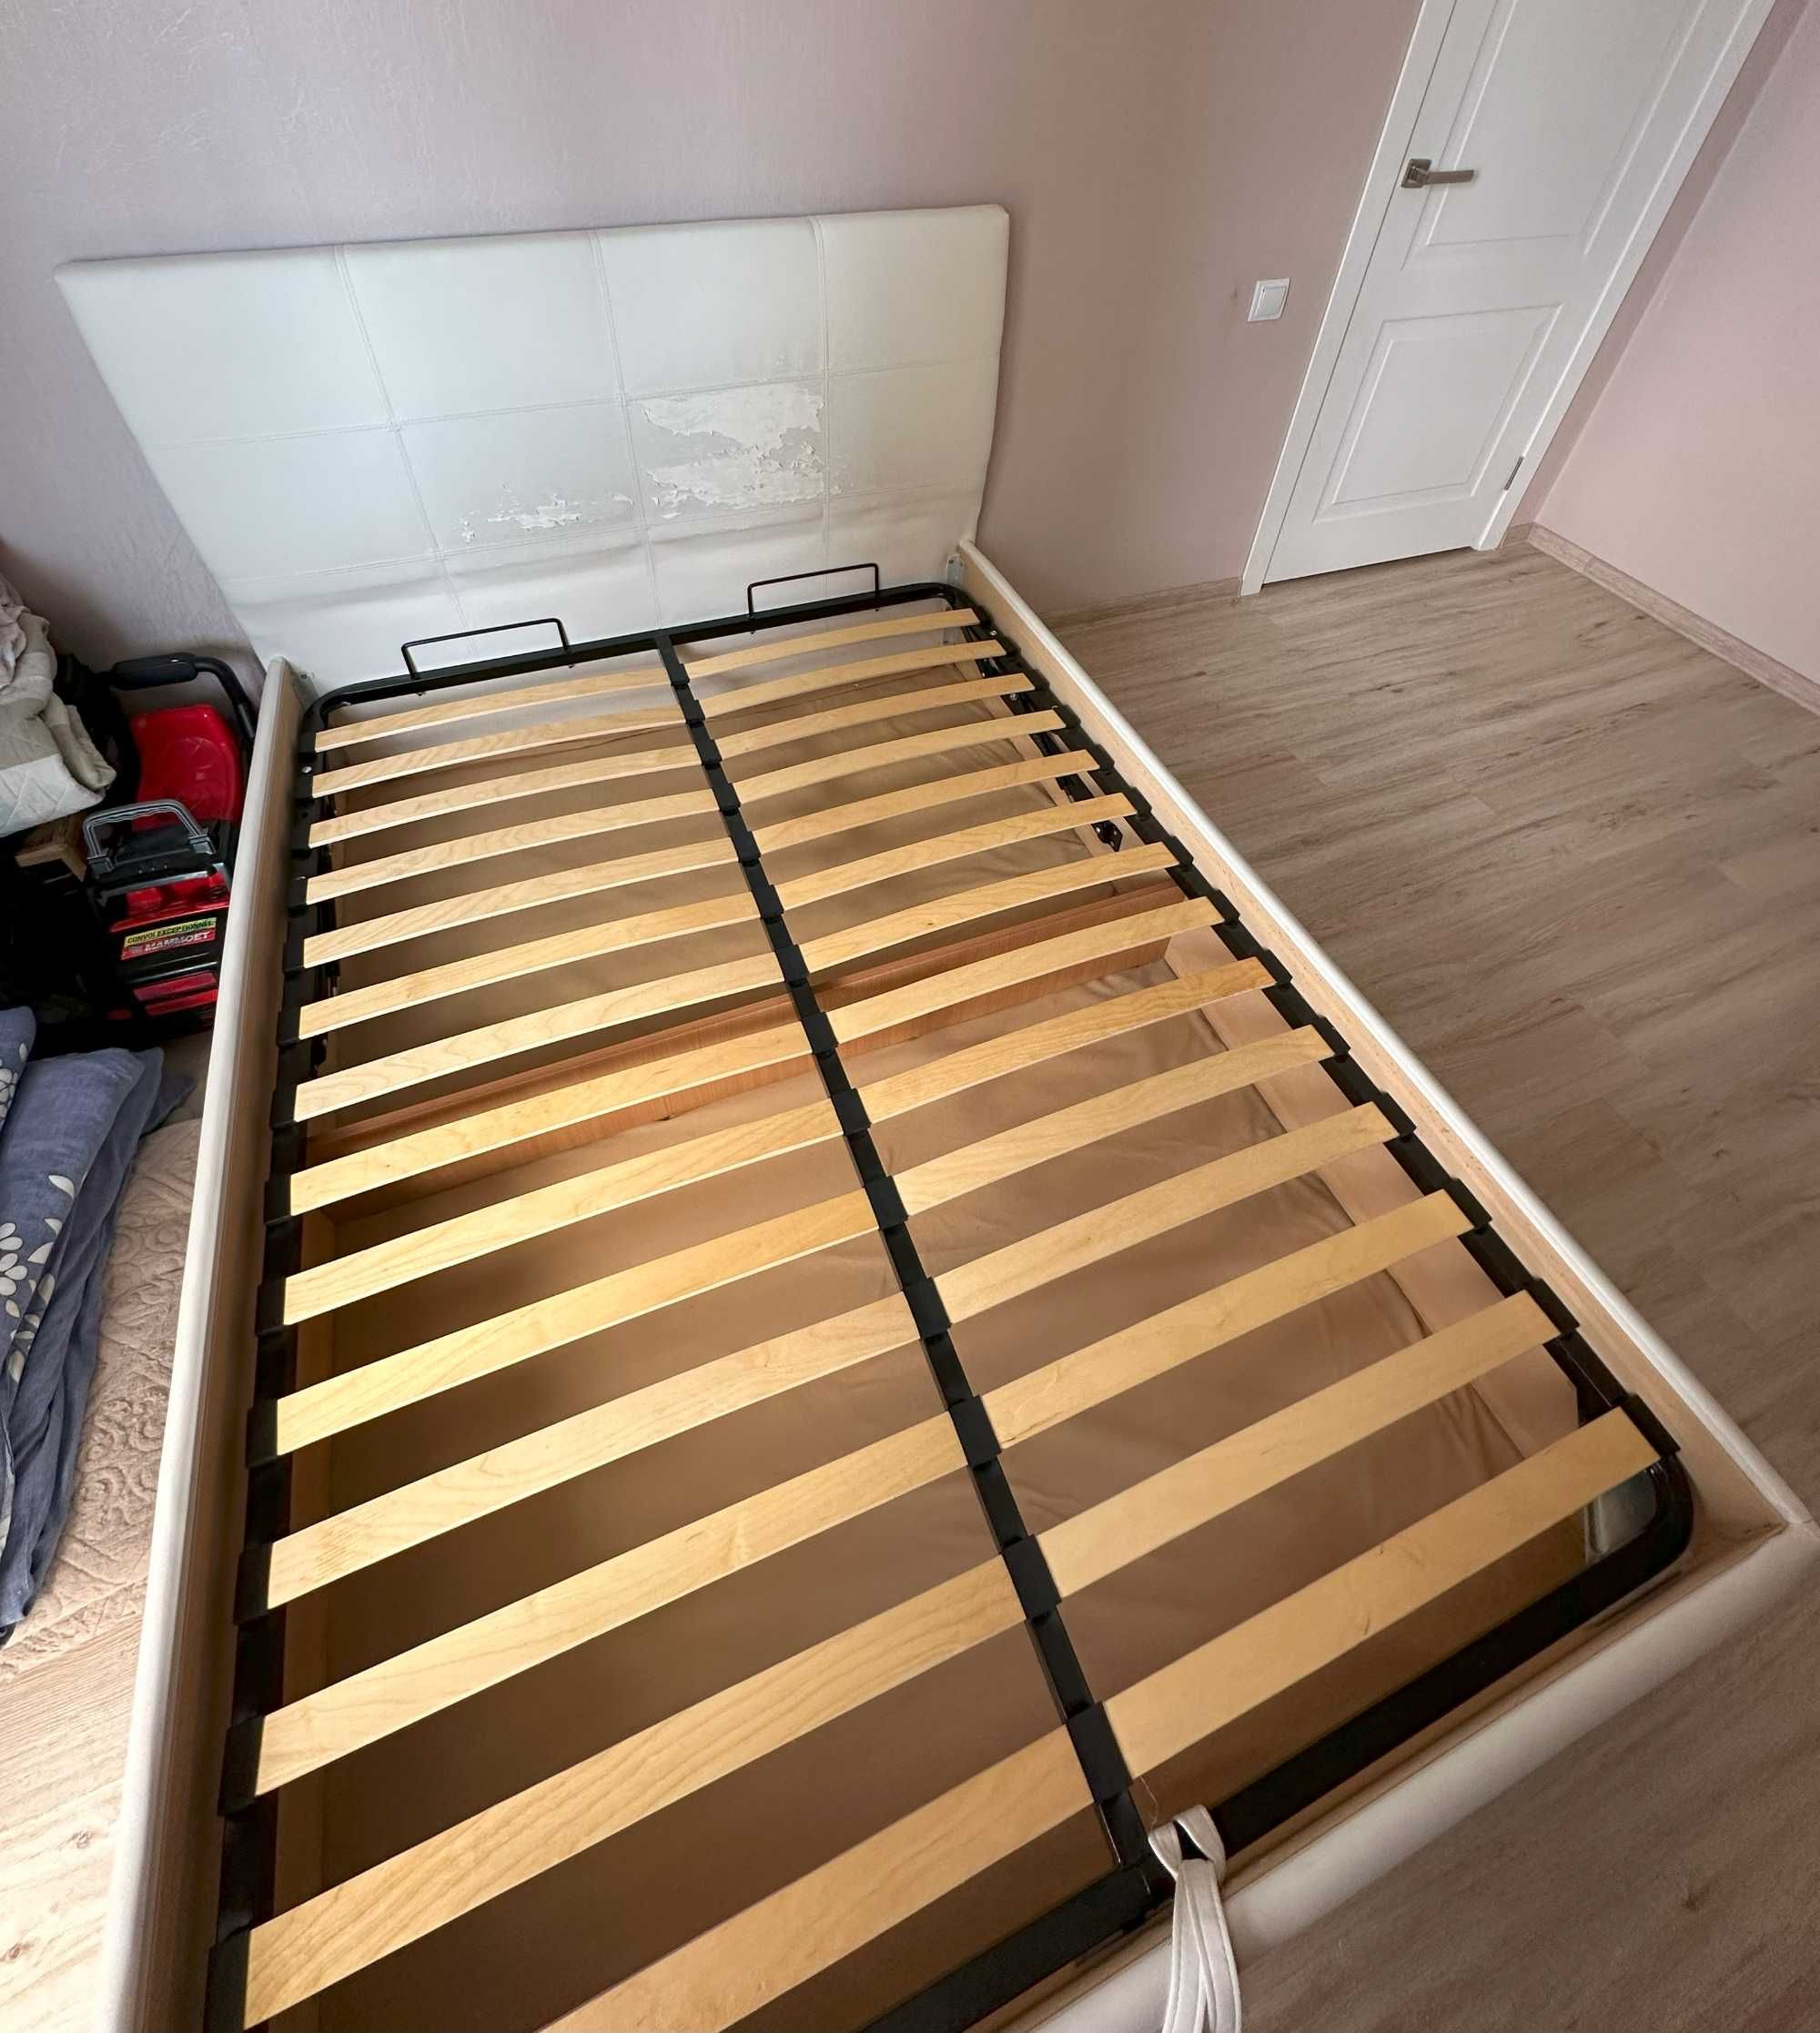 Продам двуспальную кровать 2 х 1,6 м. Компактная, удобная, без матраса